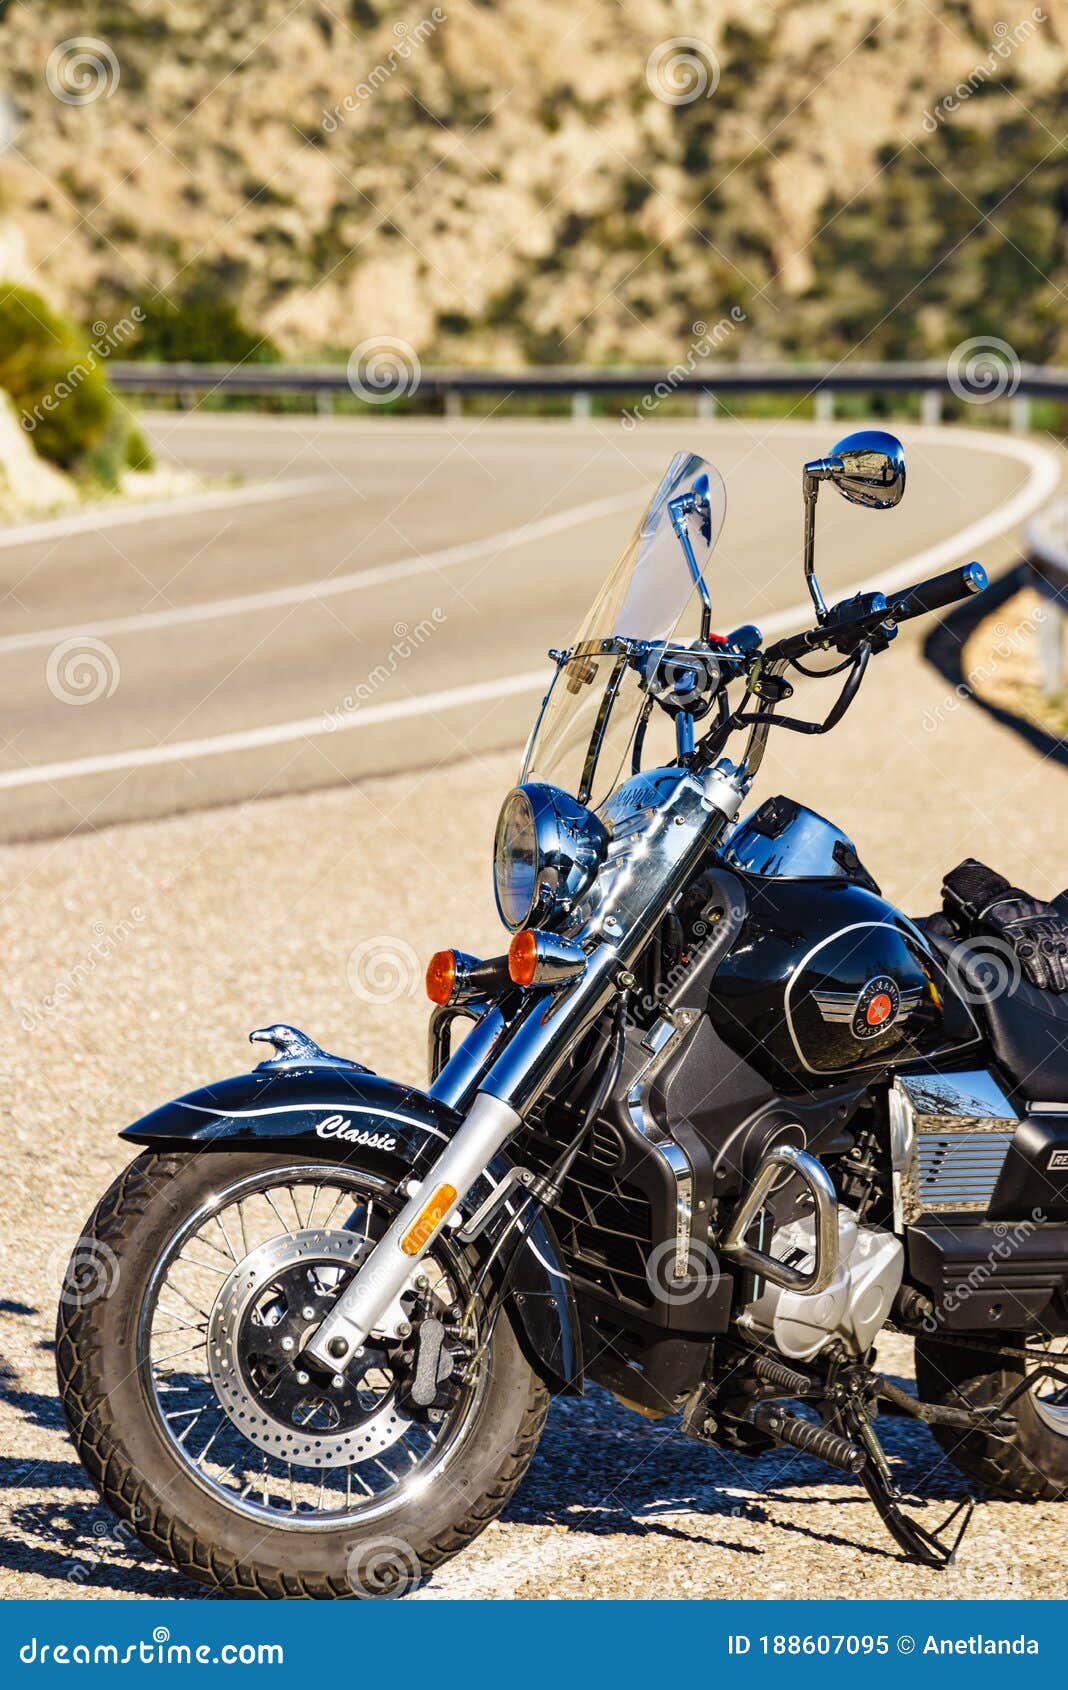 https://thumbs.dreamstime.com/z/motorcycle-um-renegade-commando-classic-axxis-helmet-january-spain-mirador-de-la-granatilla-carboneras-viewpoint-cabo-188607095.jpg